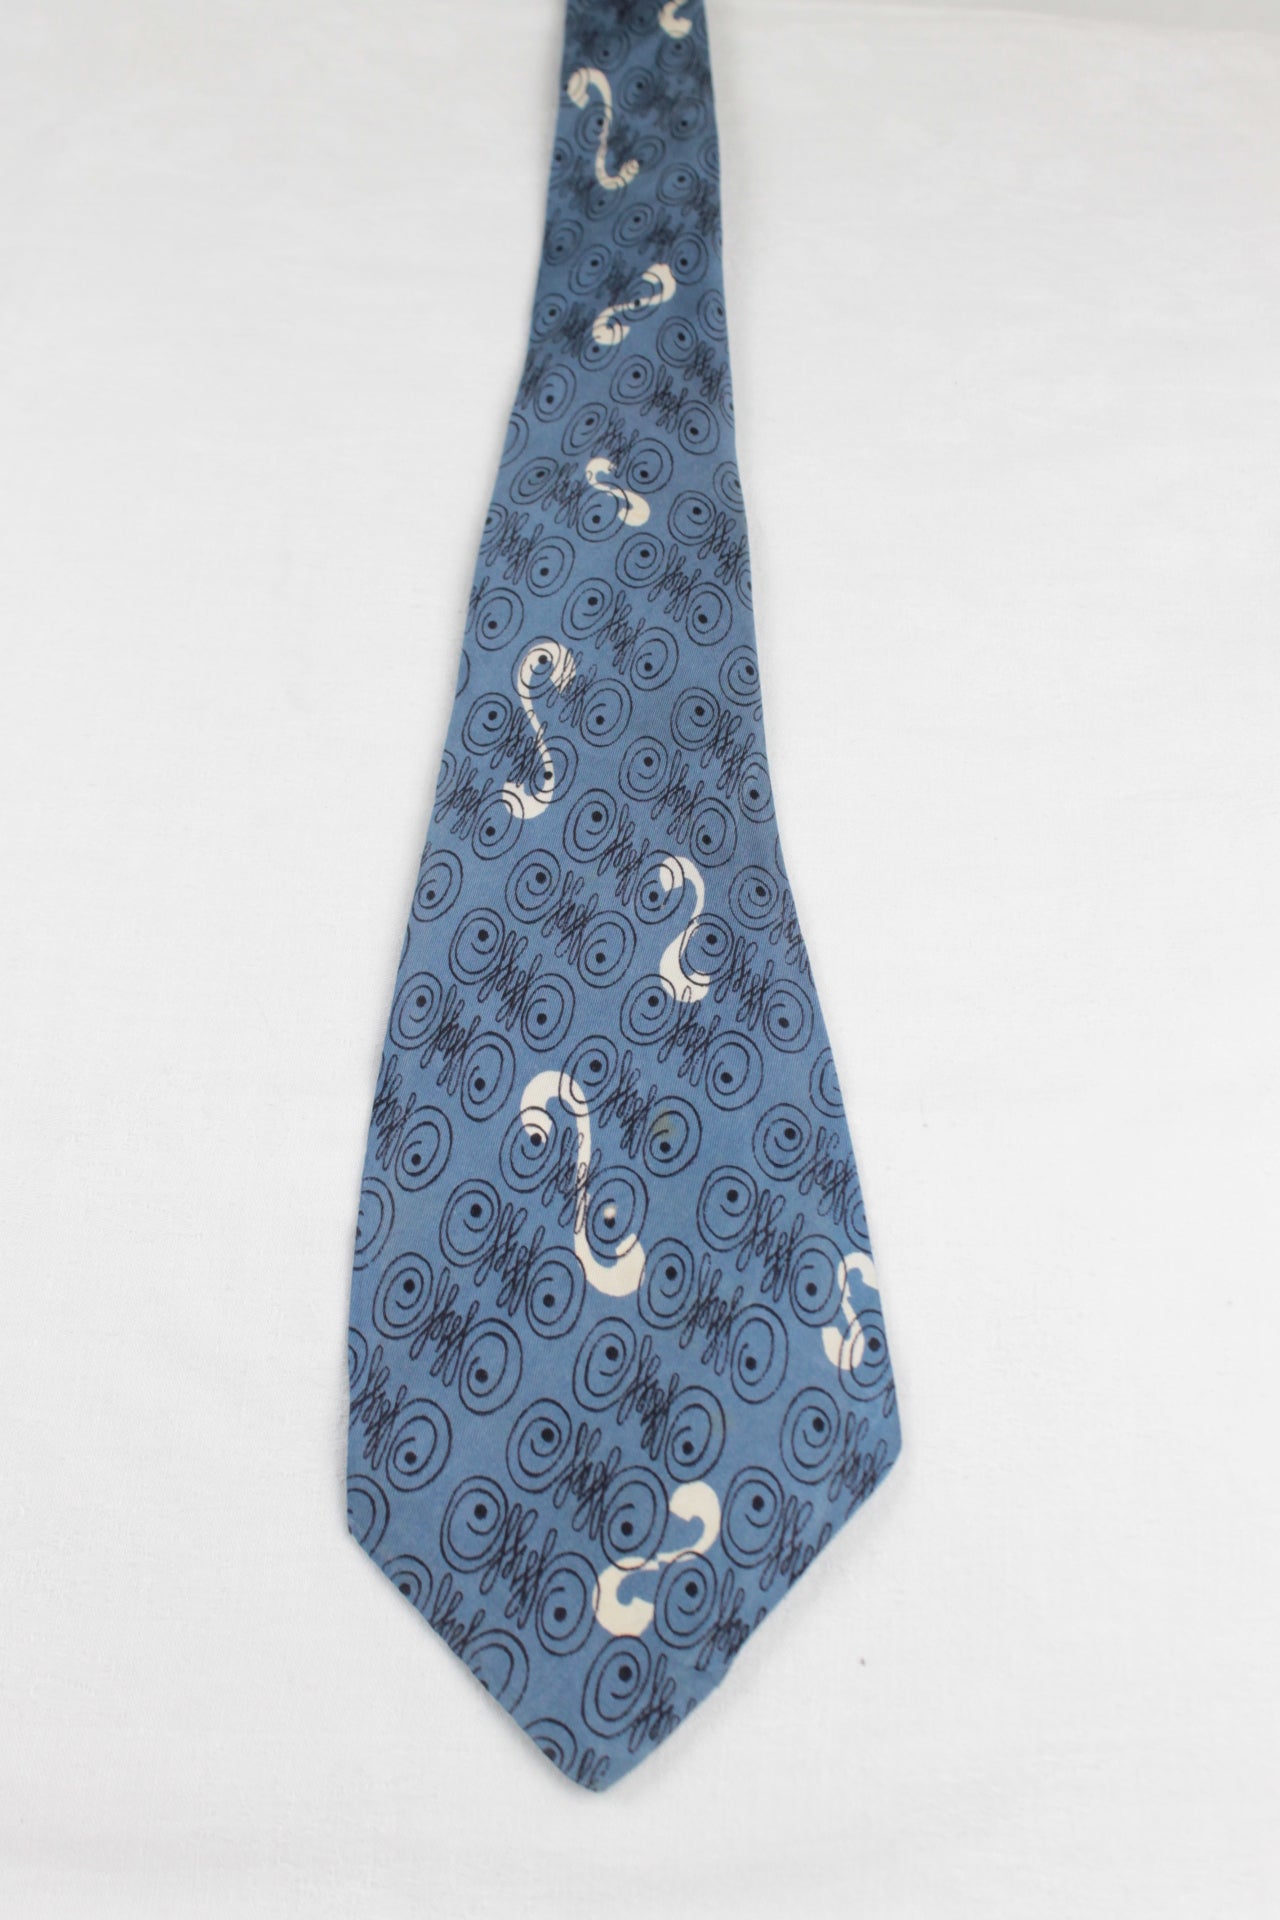 Vintage Blue White swirly reoccurring Pattern Swing Tie 1940s/50s